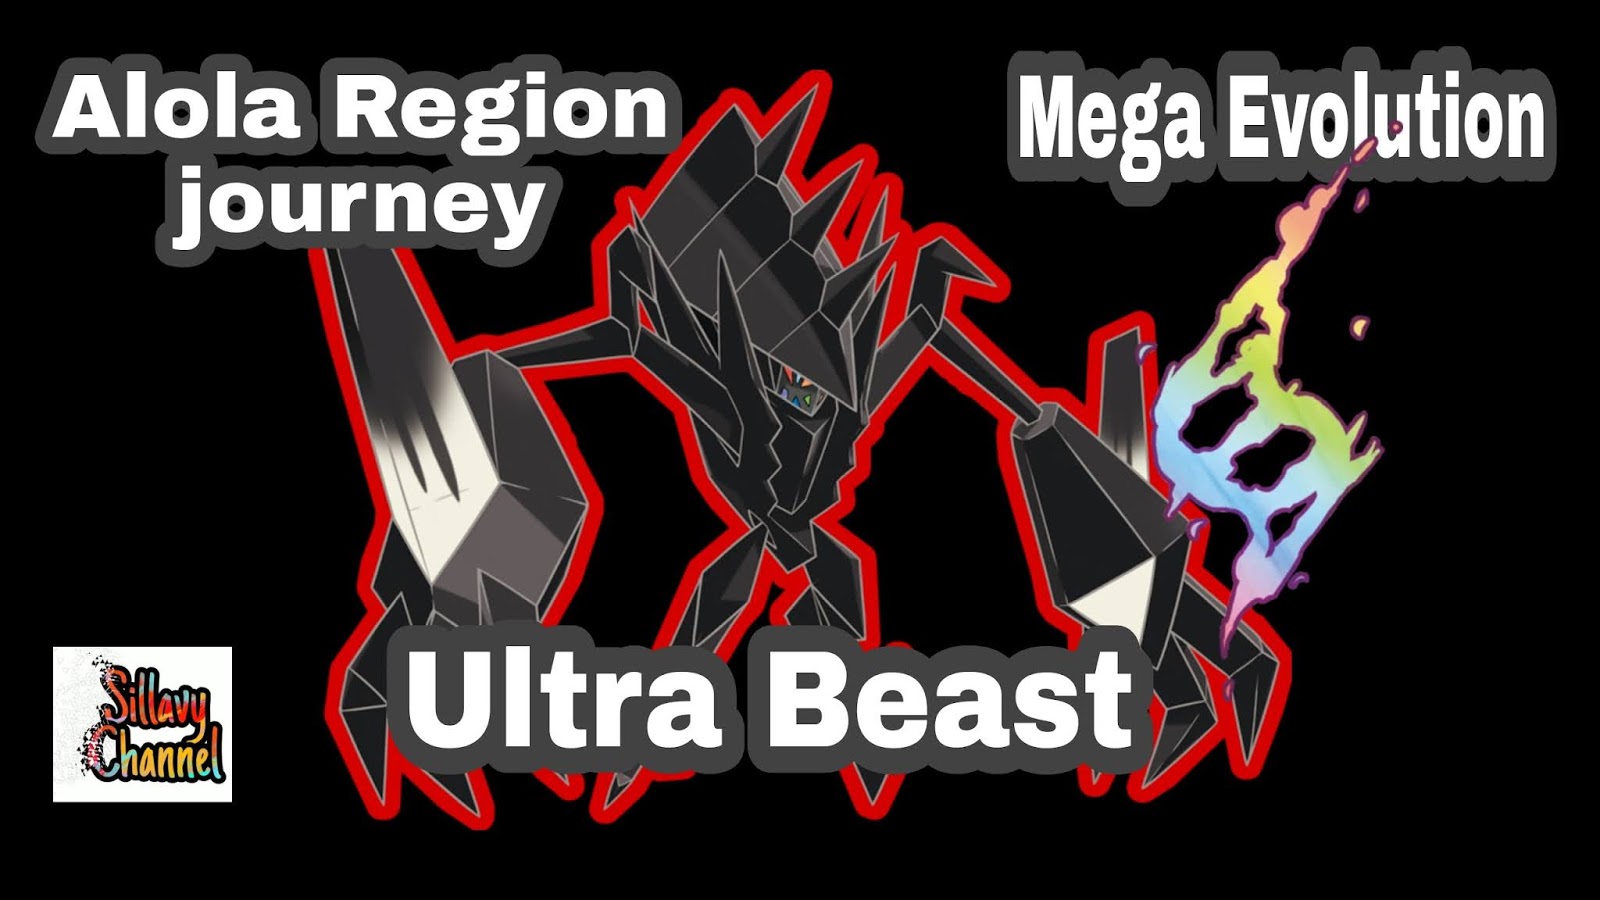 Pokemon Catastrophe V 6 New Completed Pokemon Gba Rom Hack With Alola Journey Ash Greninja Mega Evolution Ultra Beast